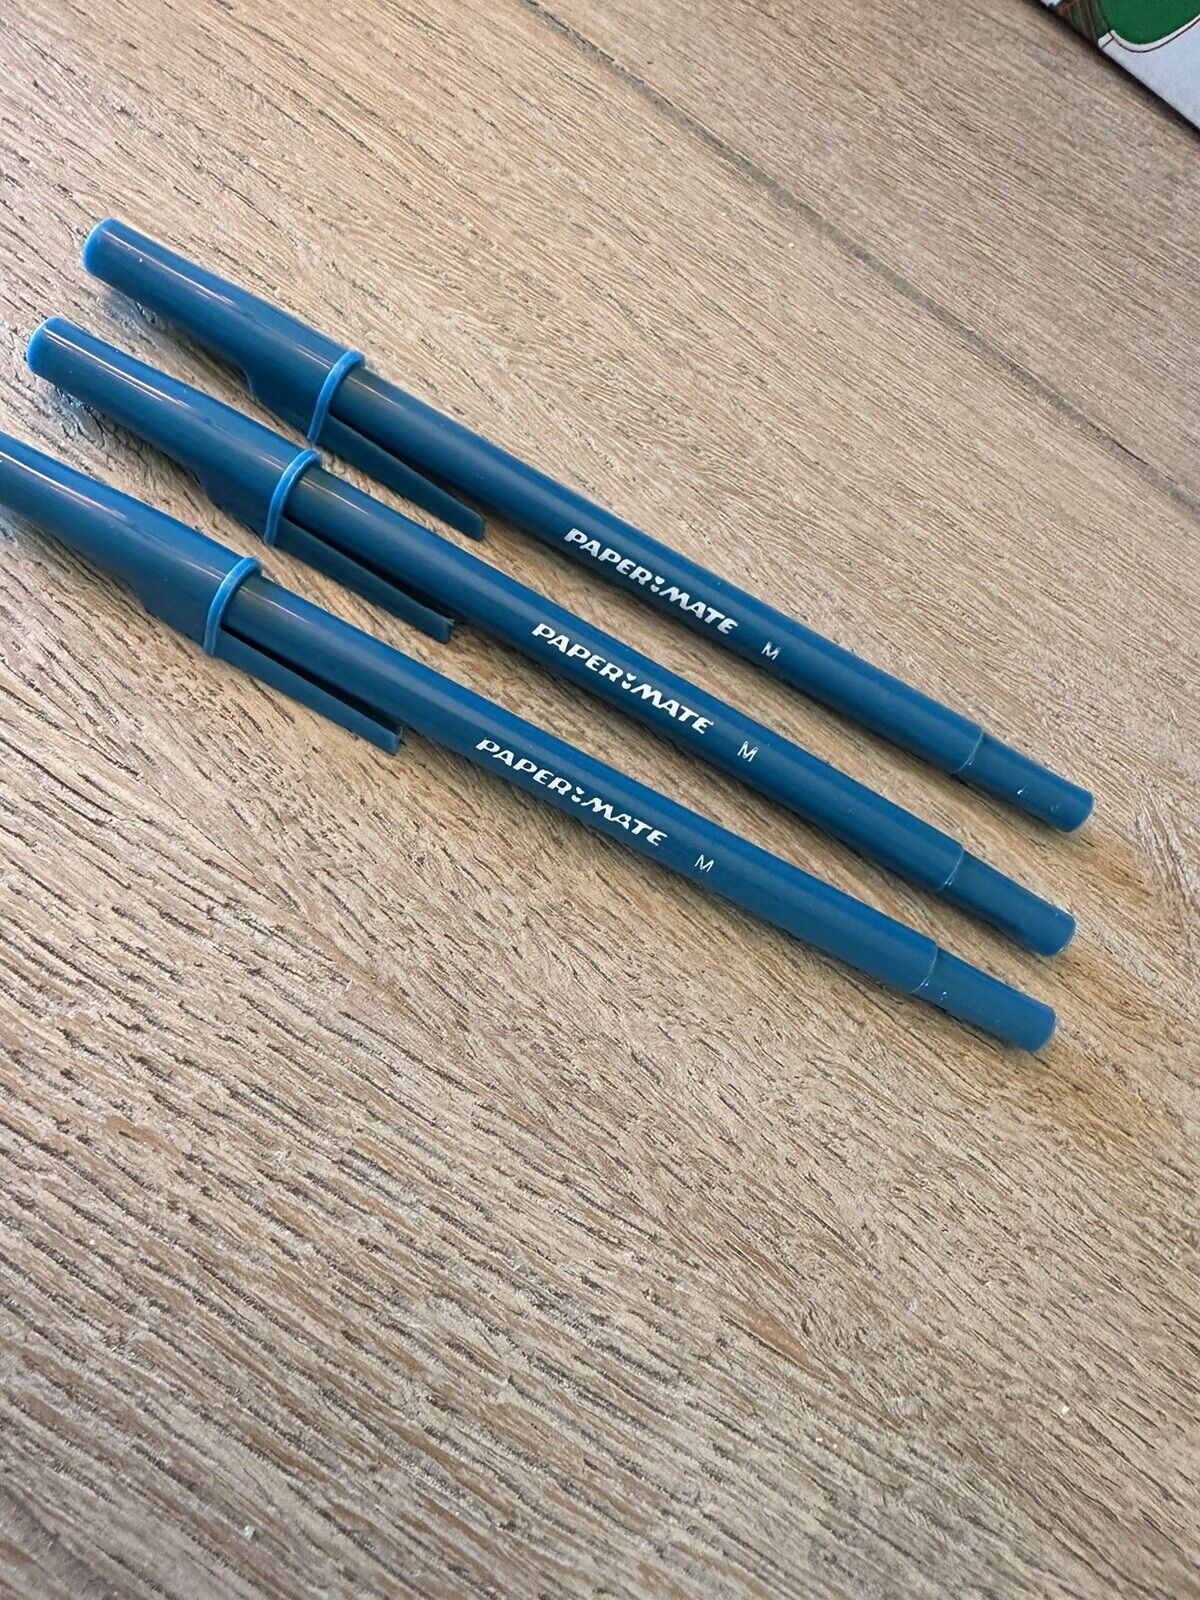 3 VTG Paper Mate BLUE Ballpoint Pens Write Bros. Medium Pt. Dried Ink But Work